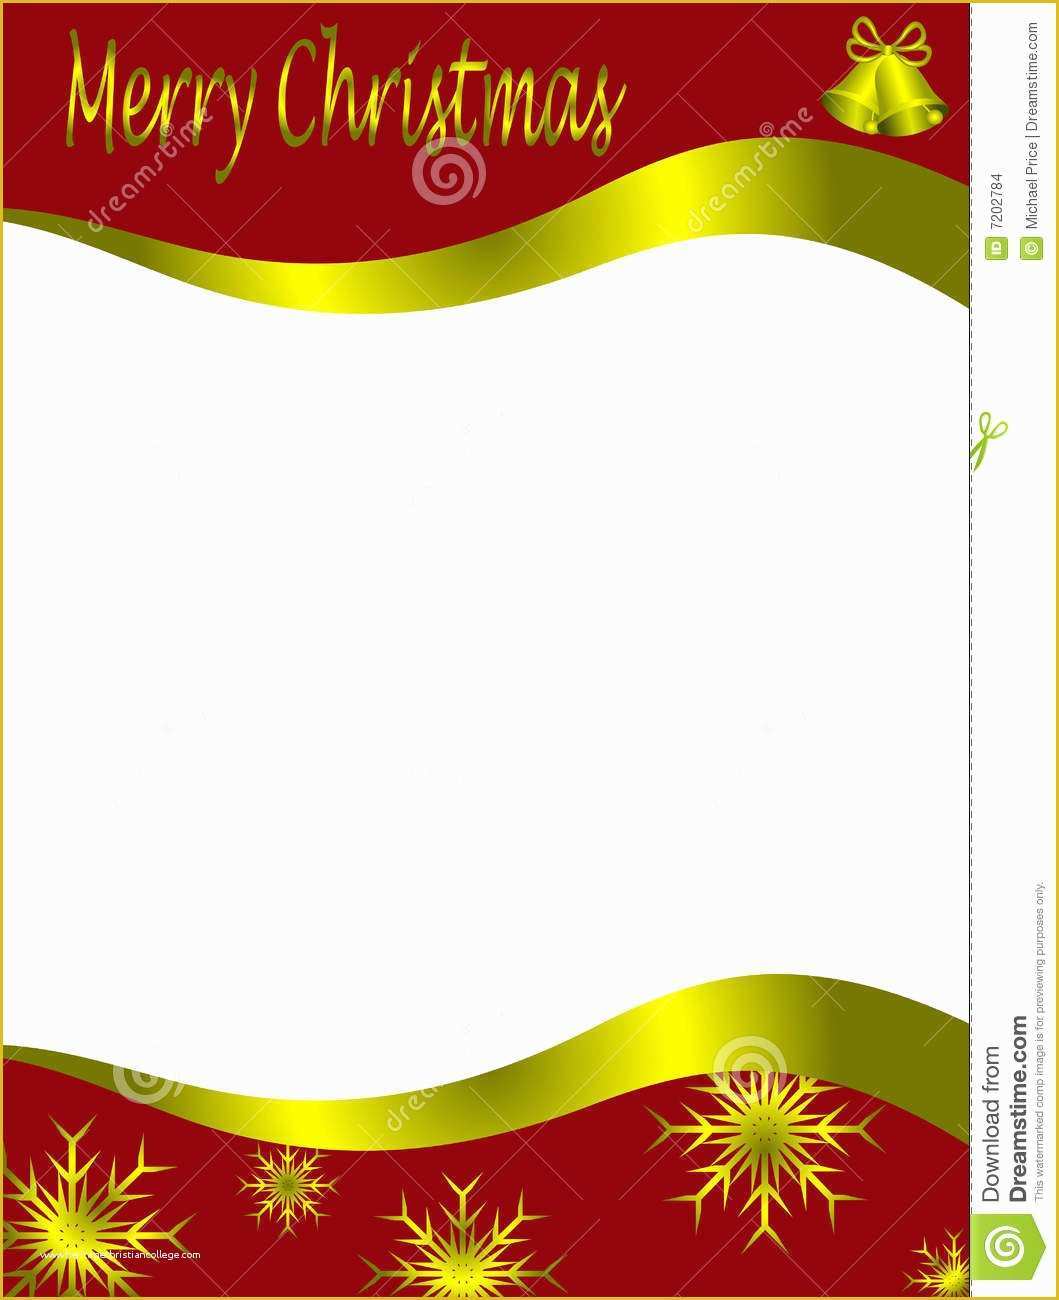 Free Christmas Newsletter Templates Of Christmas Letter Template Stock Vector Illustration Of